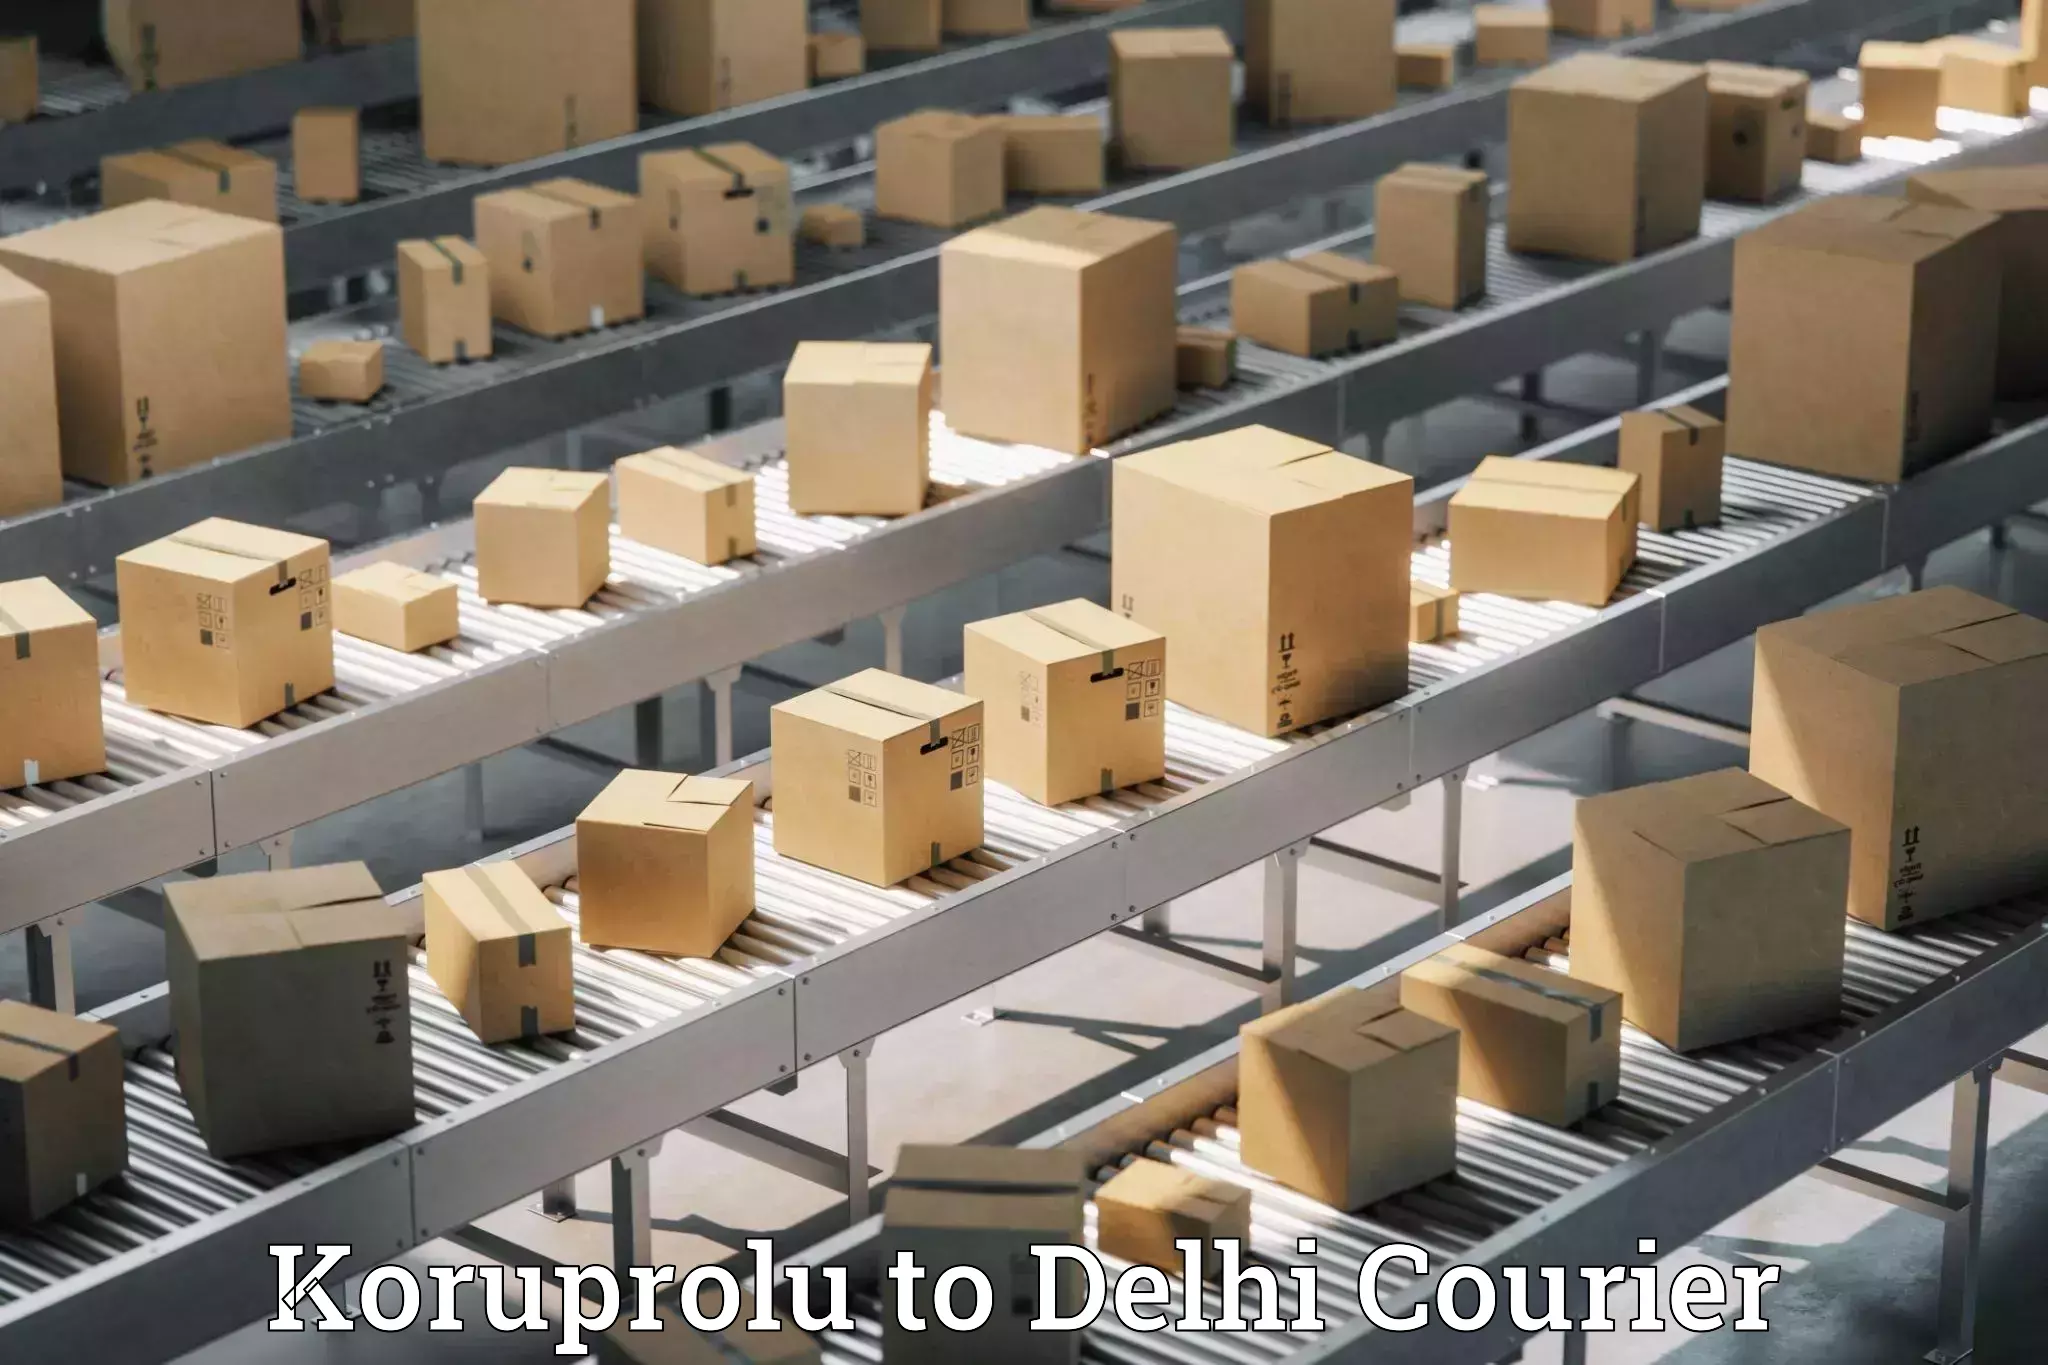 State-of-the-art courier technology Koruprolu to Delhi